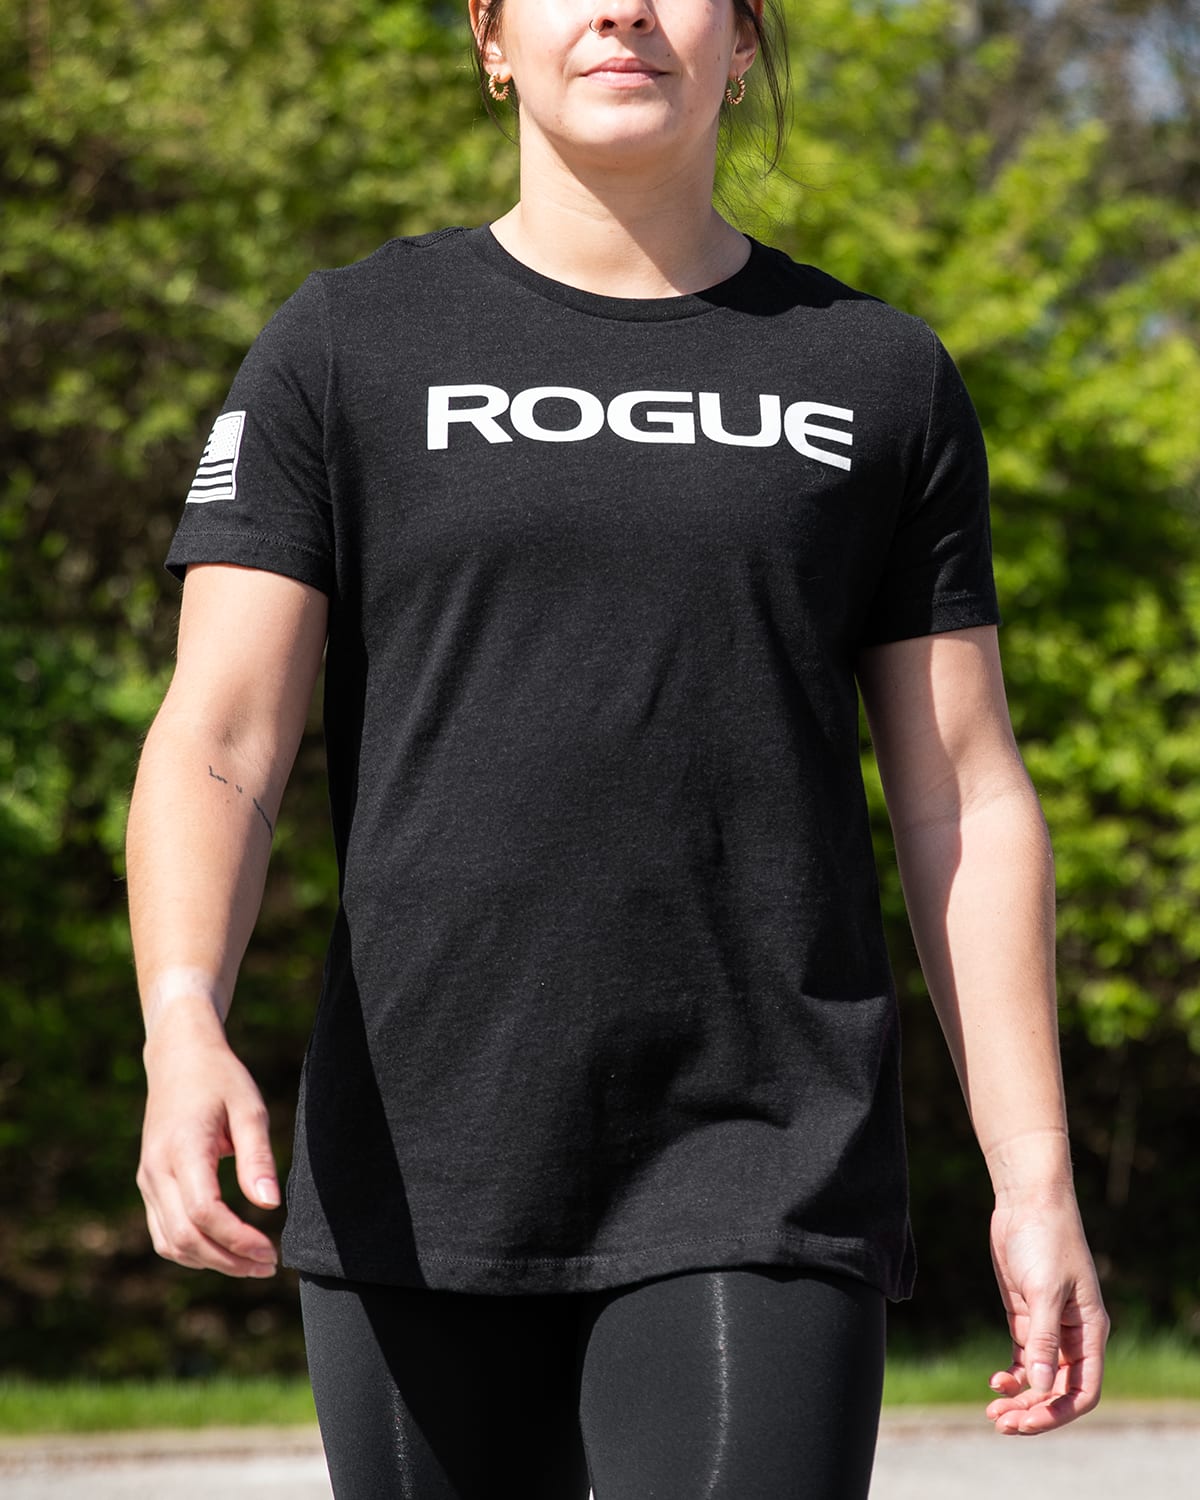 Rogue Women's Muscle Tank - Black